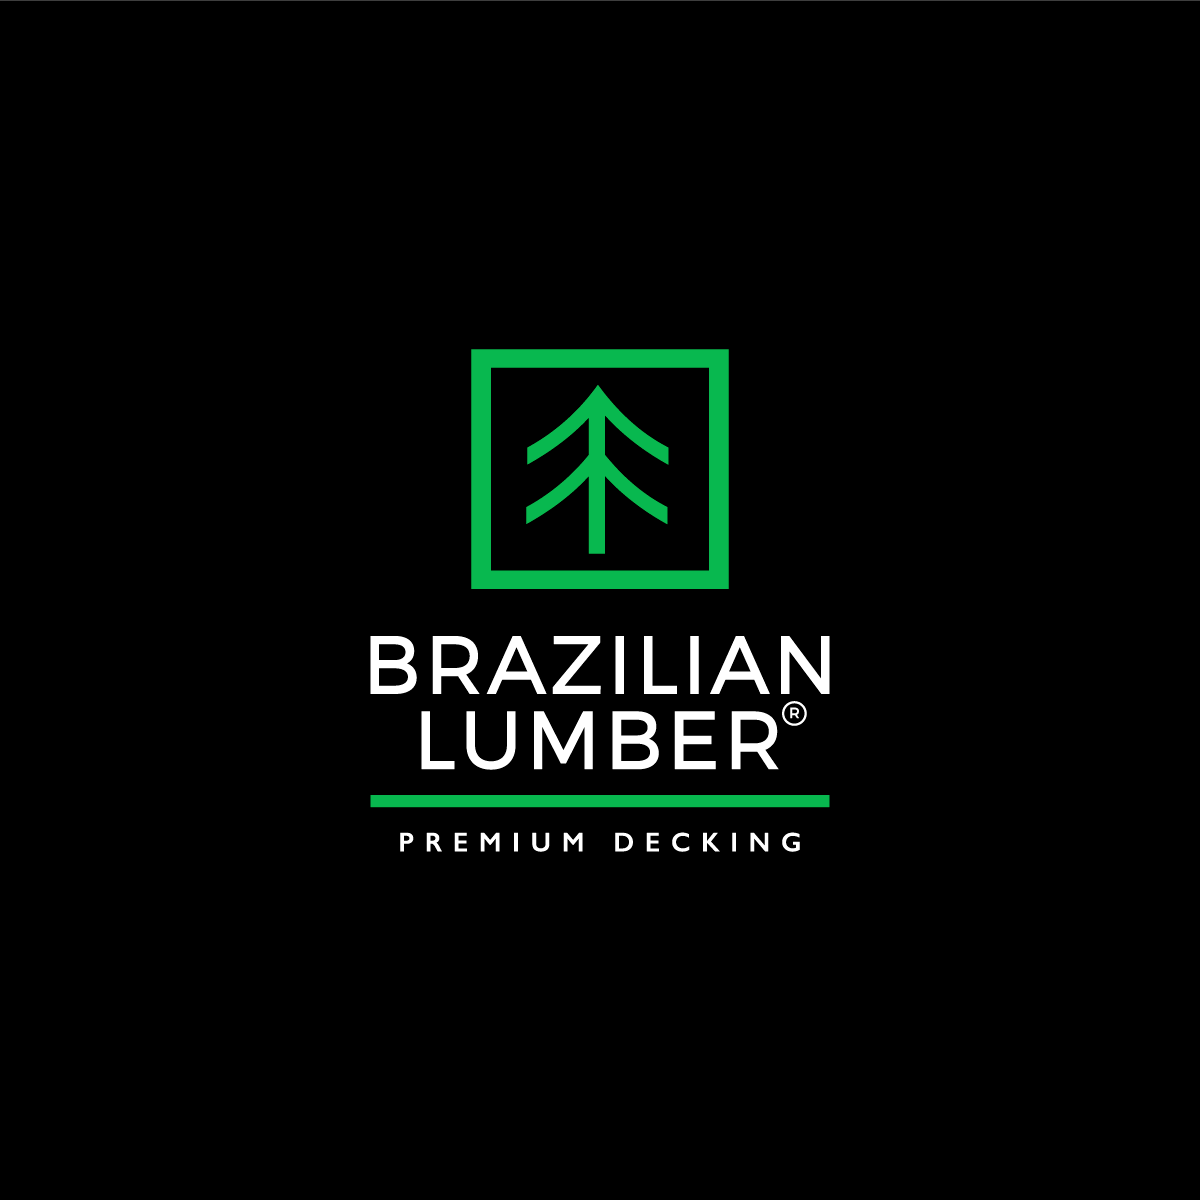 Brazilian Lumber Makes Premium Hardwood Decking Accessible Across the US